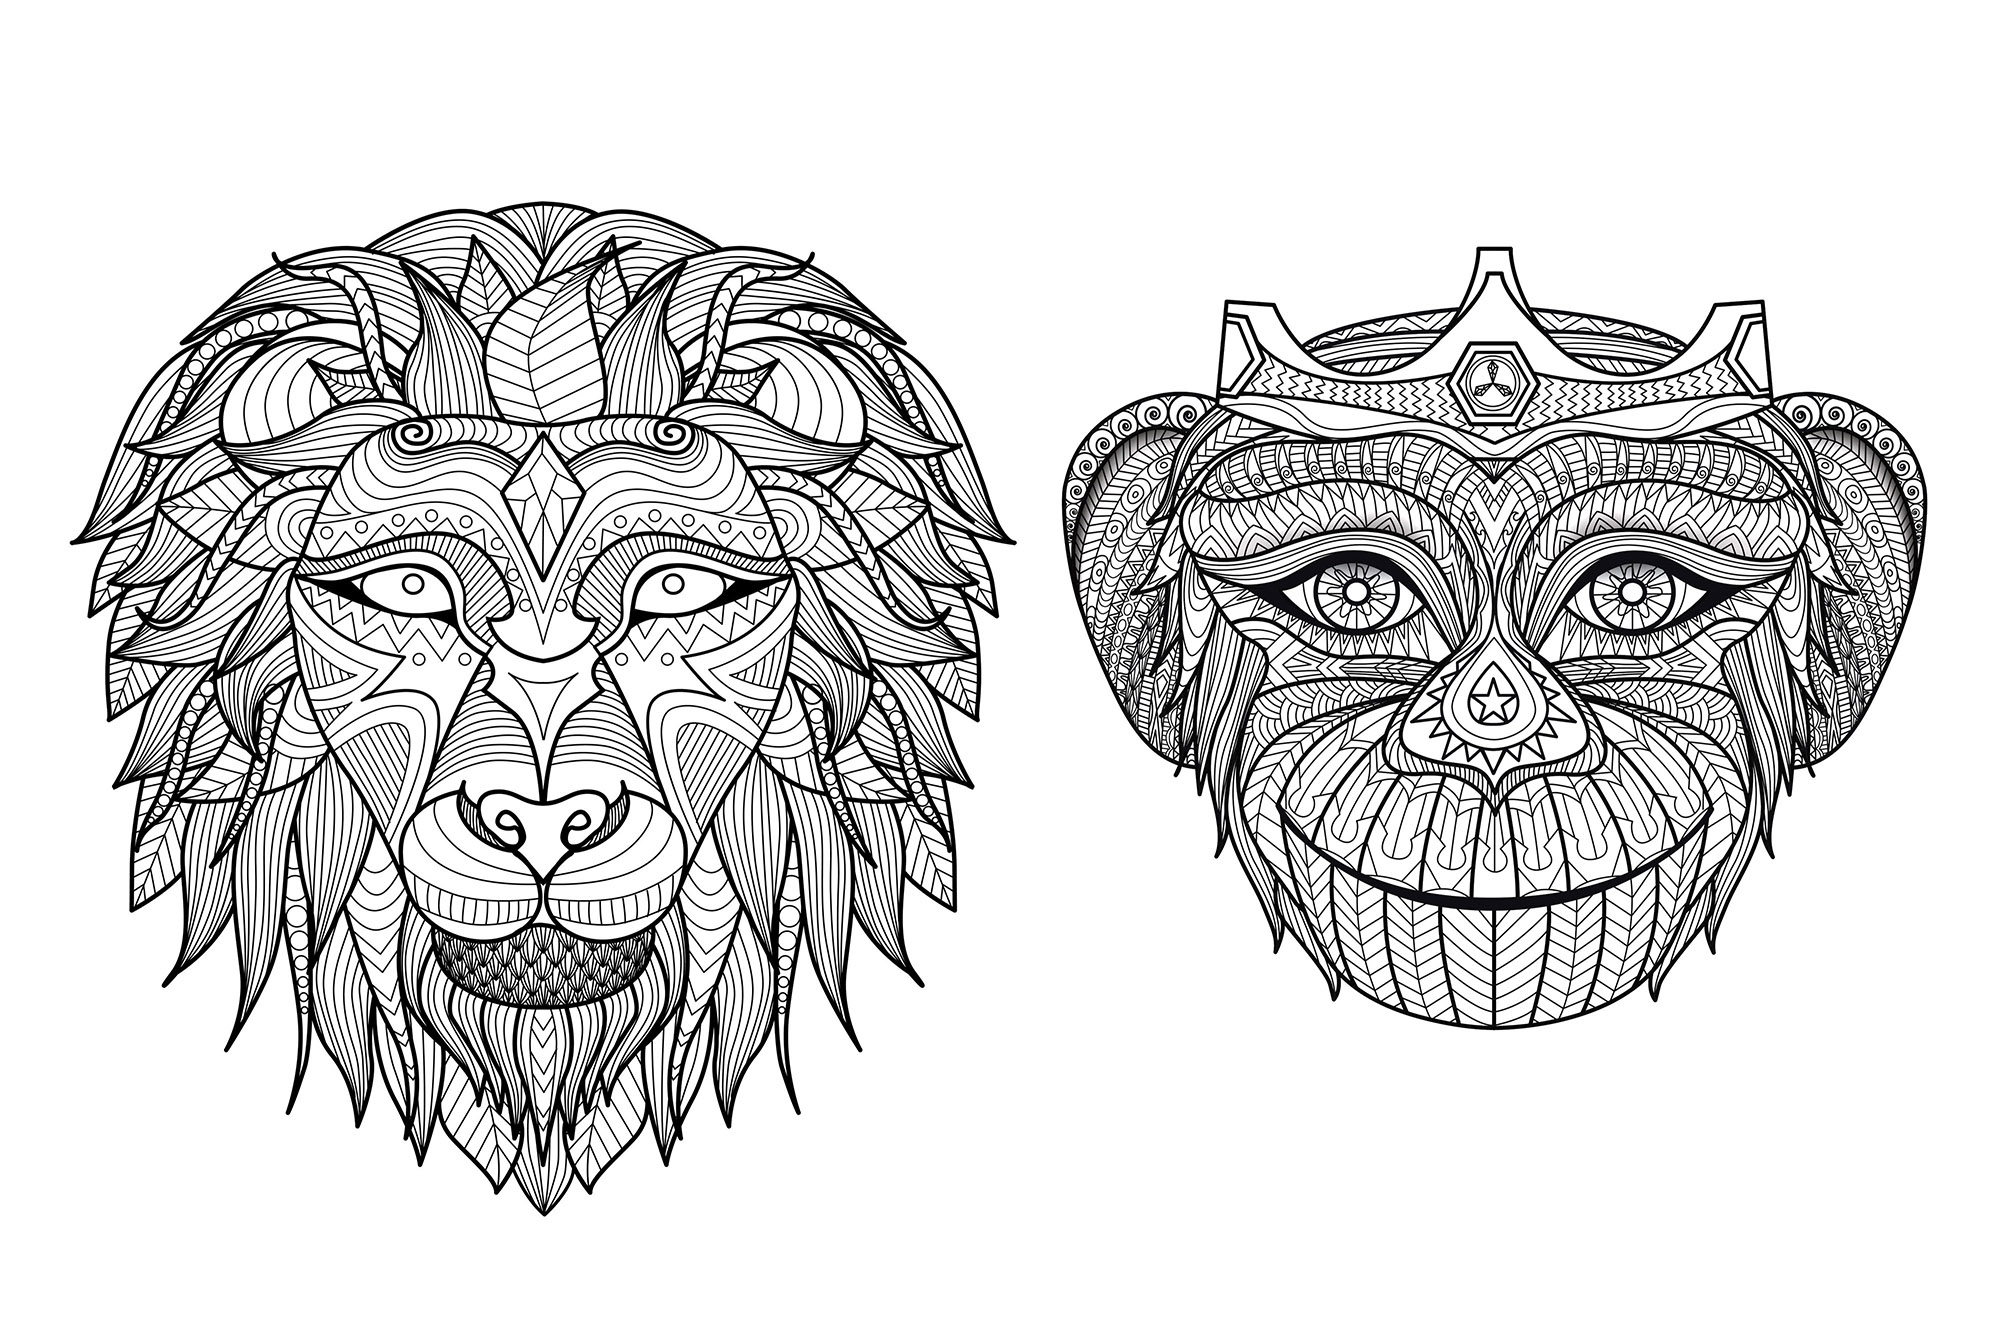 Desenhos para colorir de Macacos para baixar, Artista : Bimdeedee   Fonte : 123rf